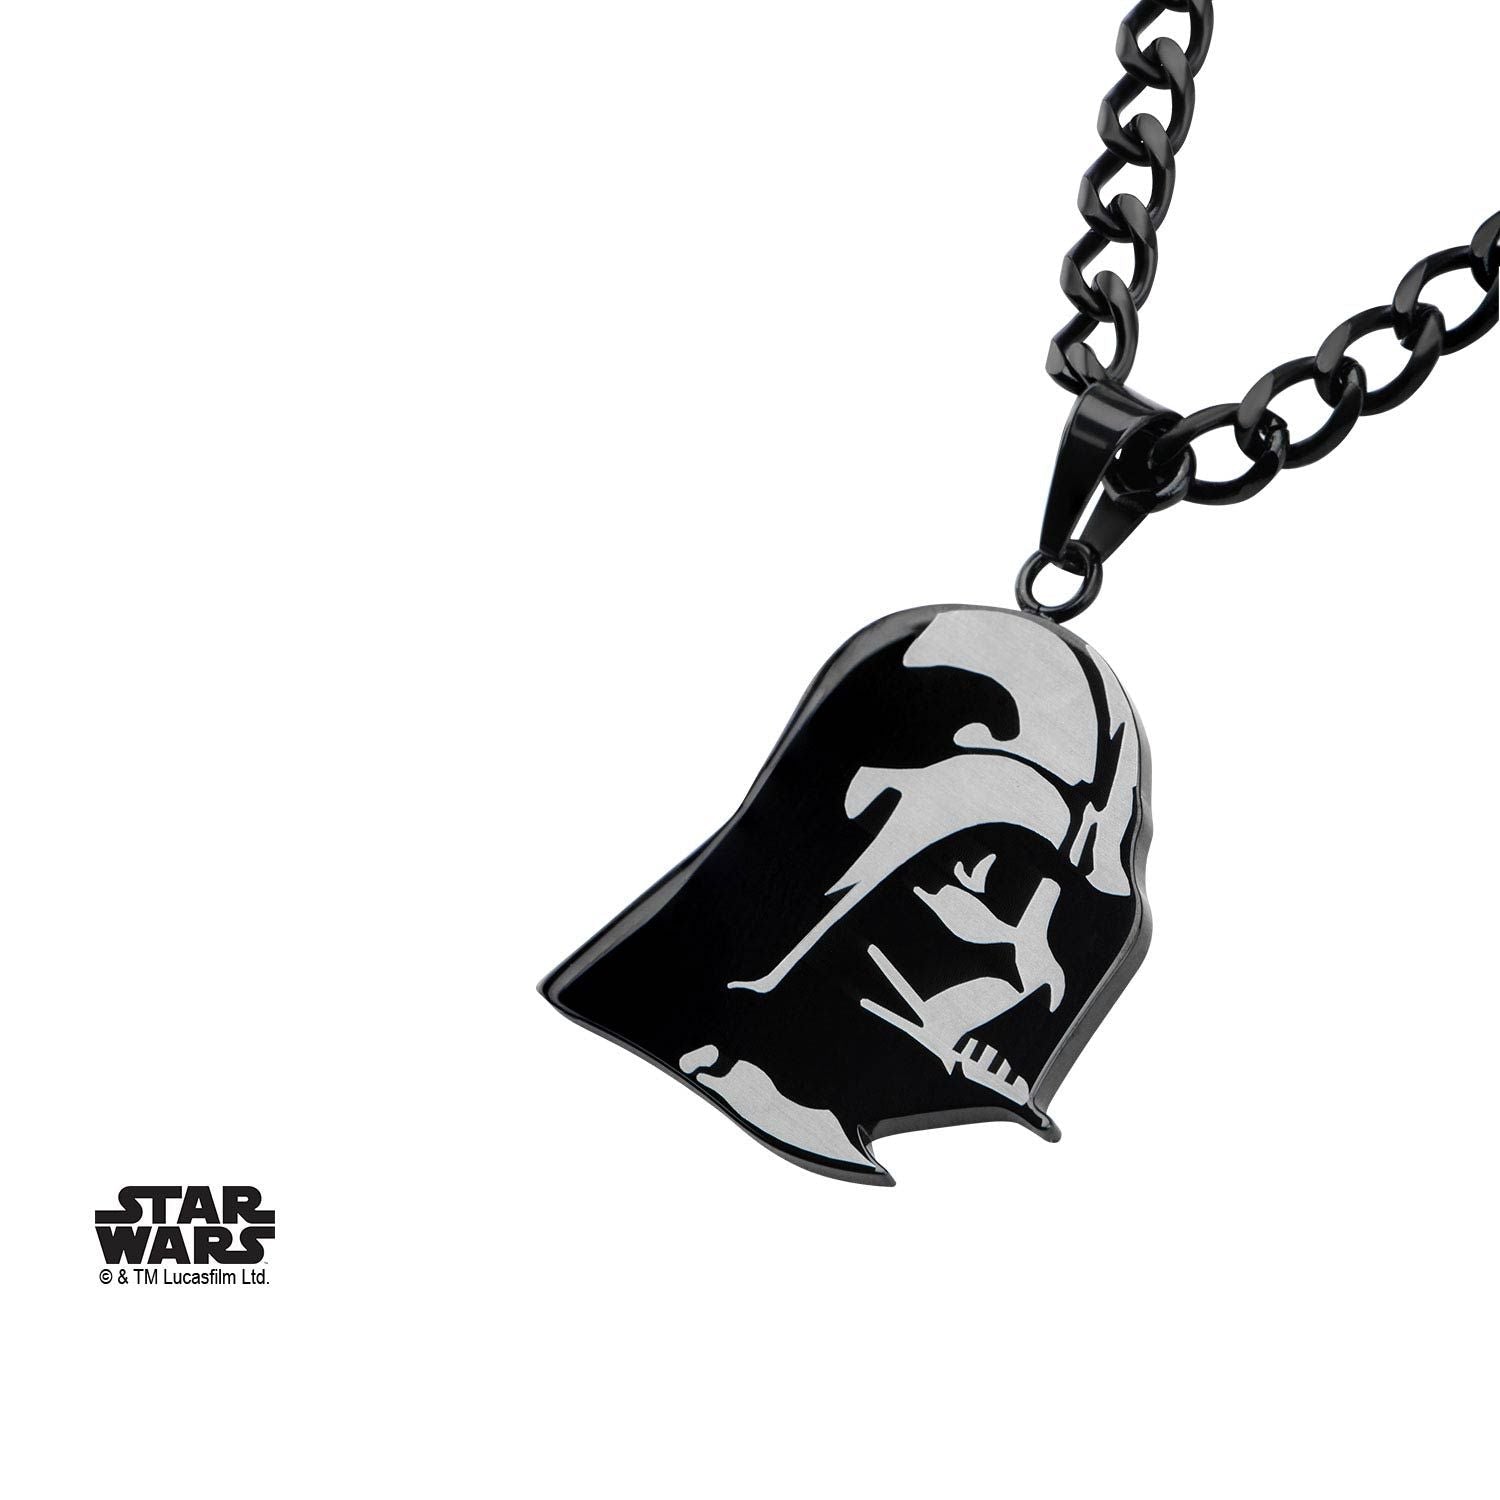 Darth Vader Inspired Jewelry by Geek.Jewelry - The Kessel Runway